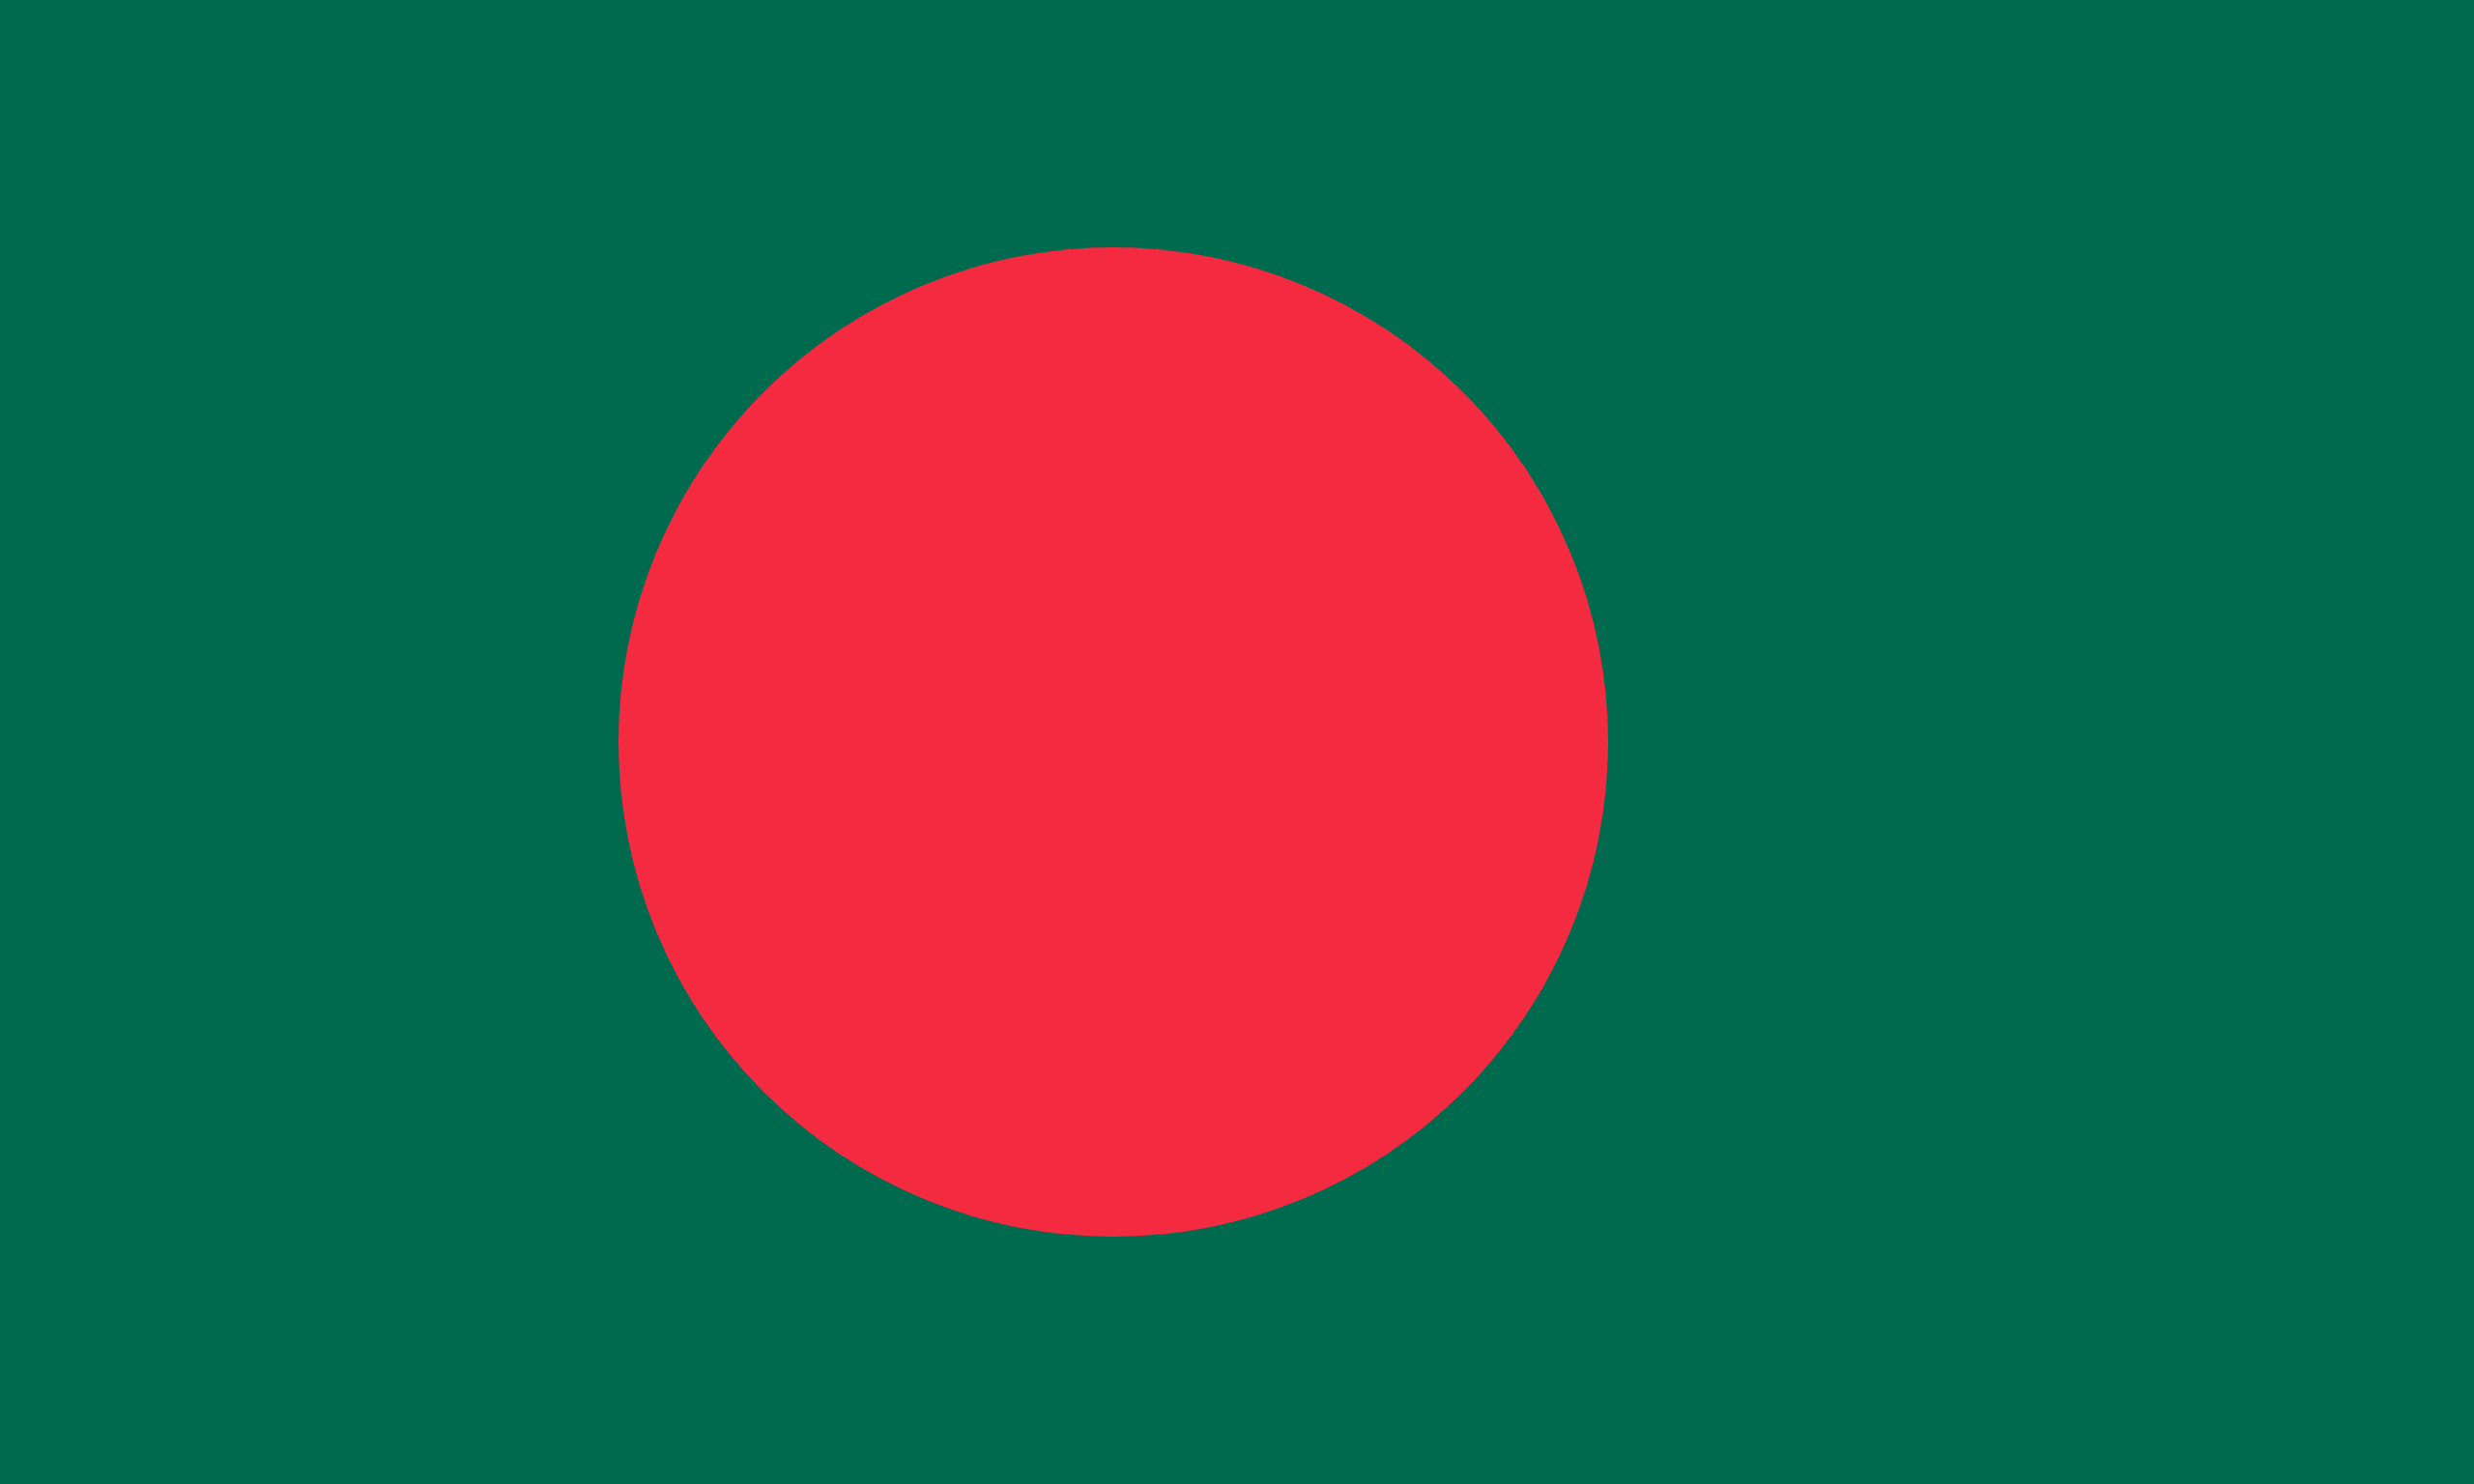 Illustration of Bangladesh flag